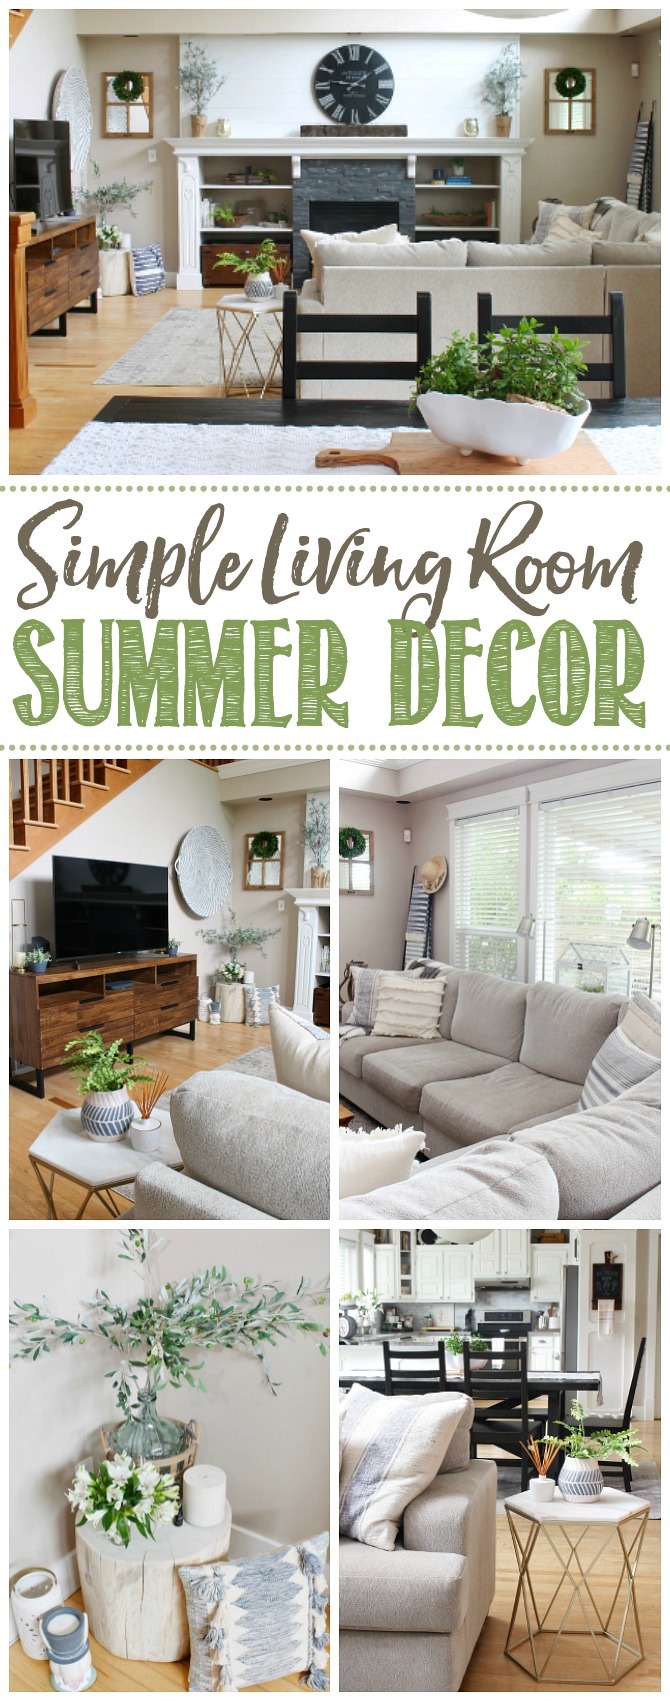 Simple living room summer decor ideas.